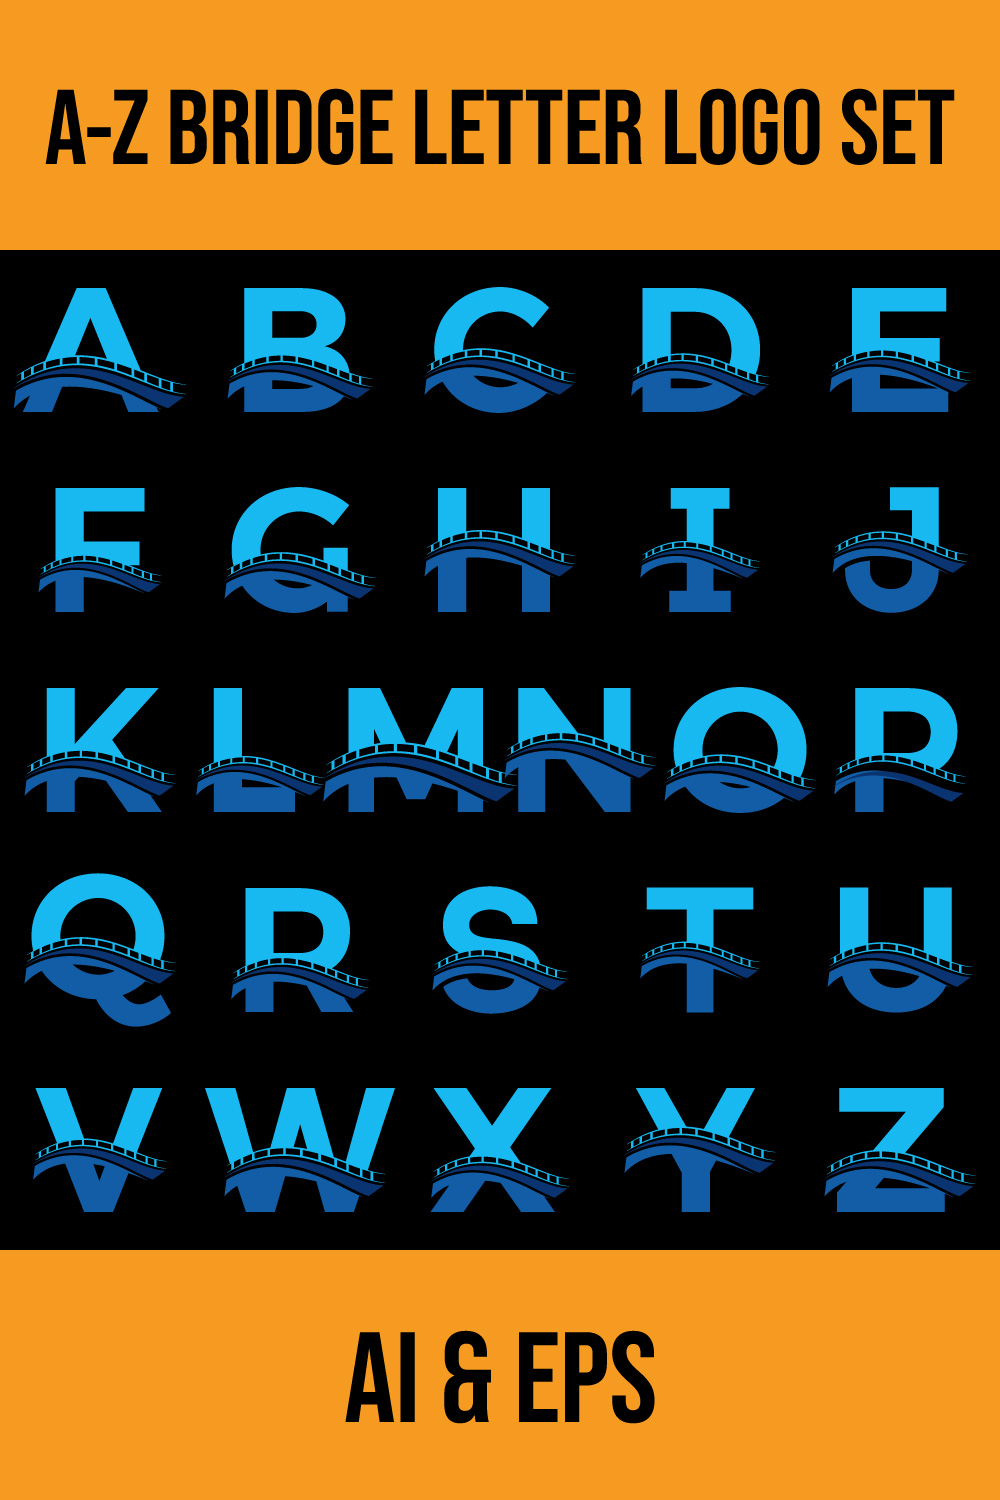 Initial A-Z monogram letter alphabet with bridge sign Abstract bridge logo design template pinterest preview image.